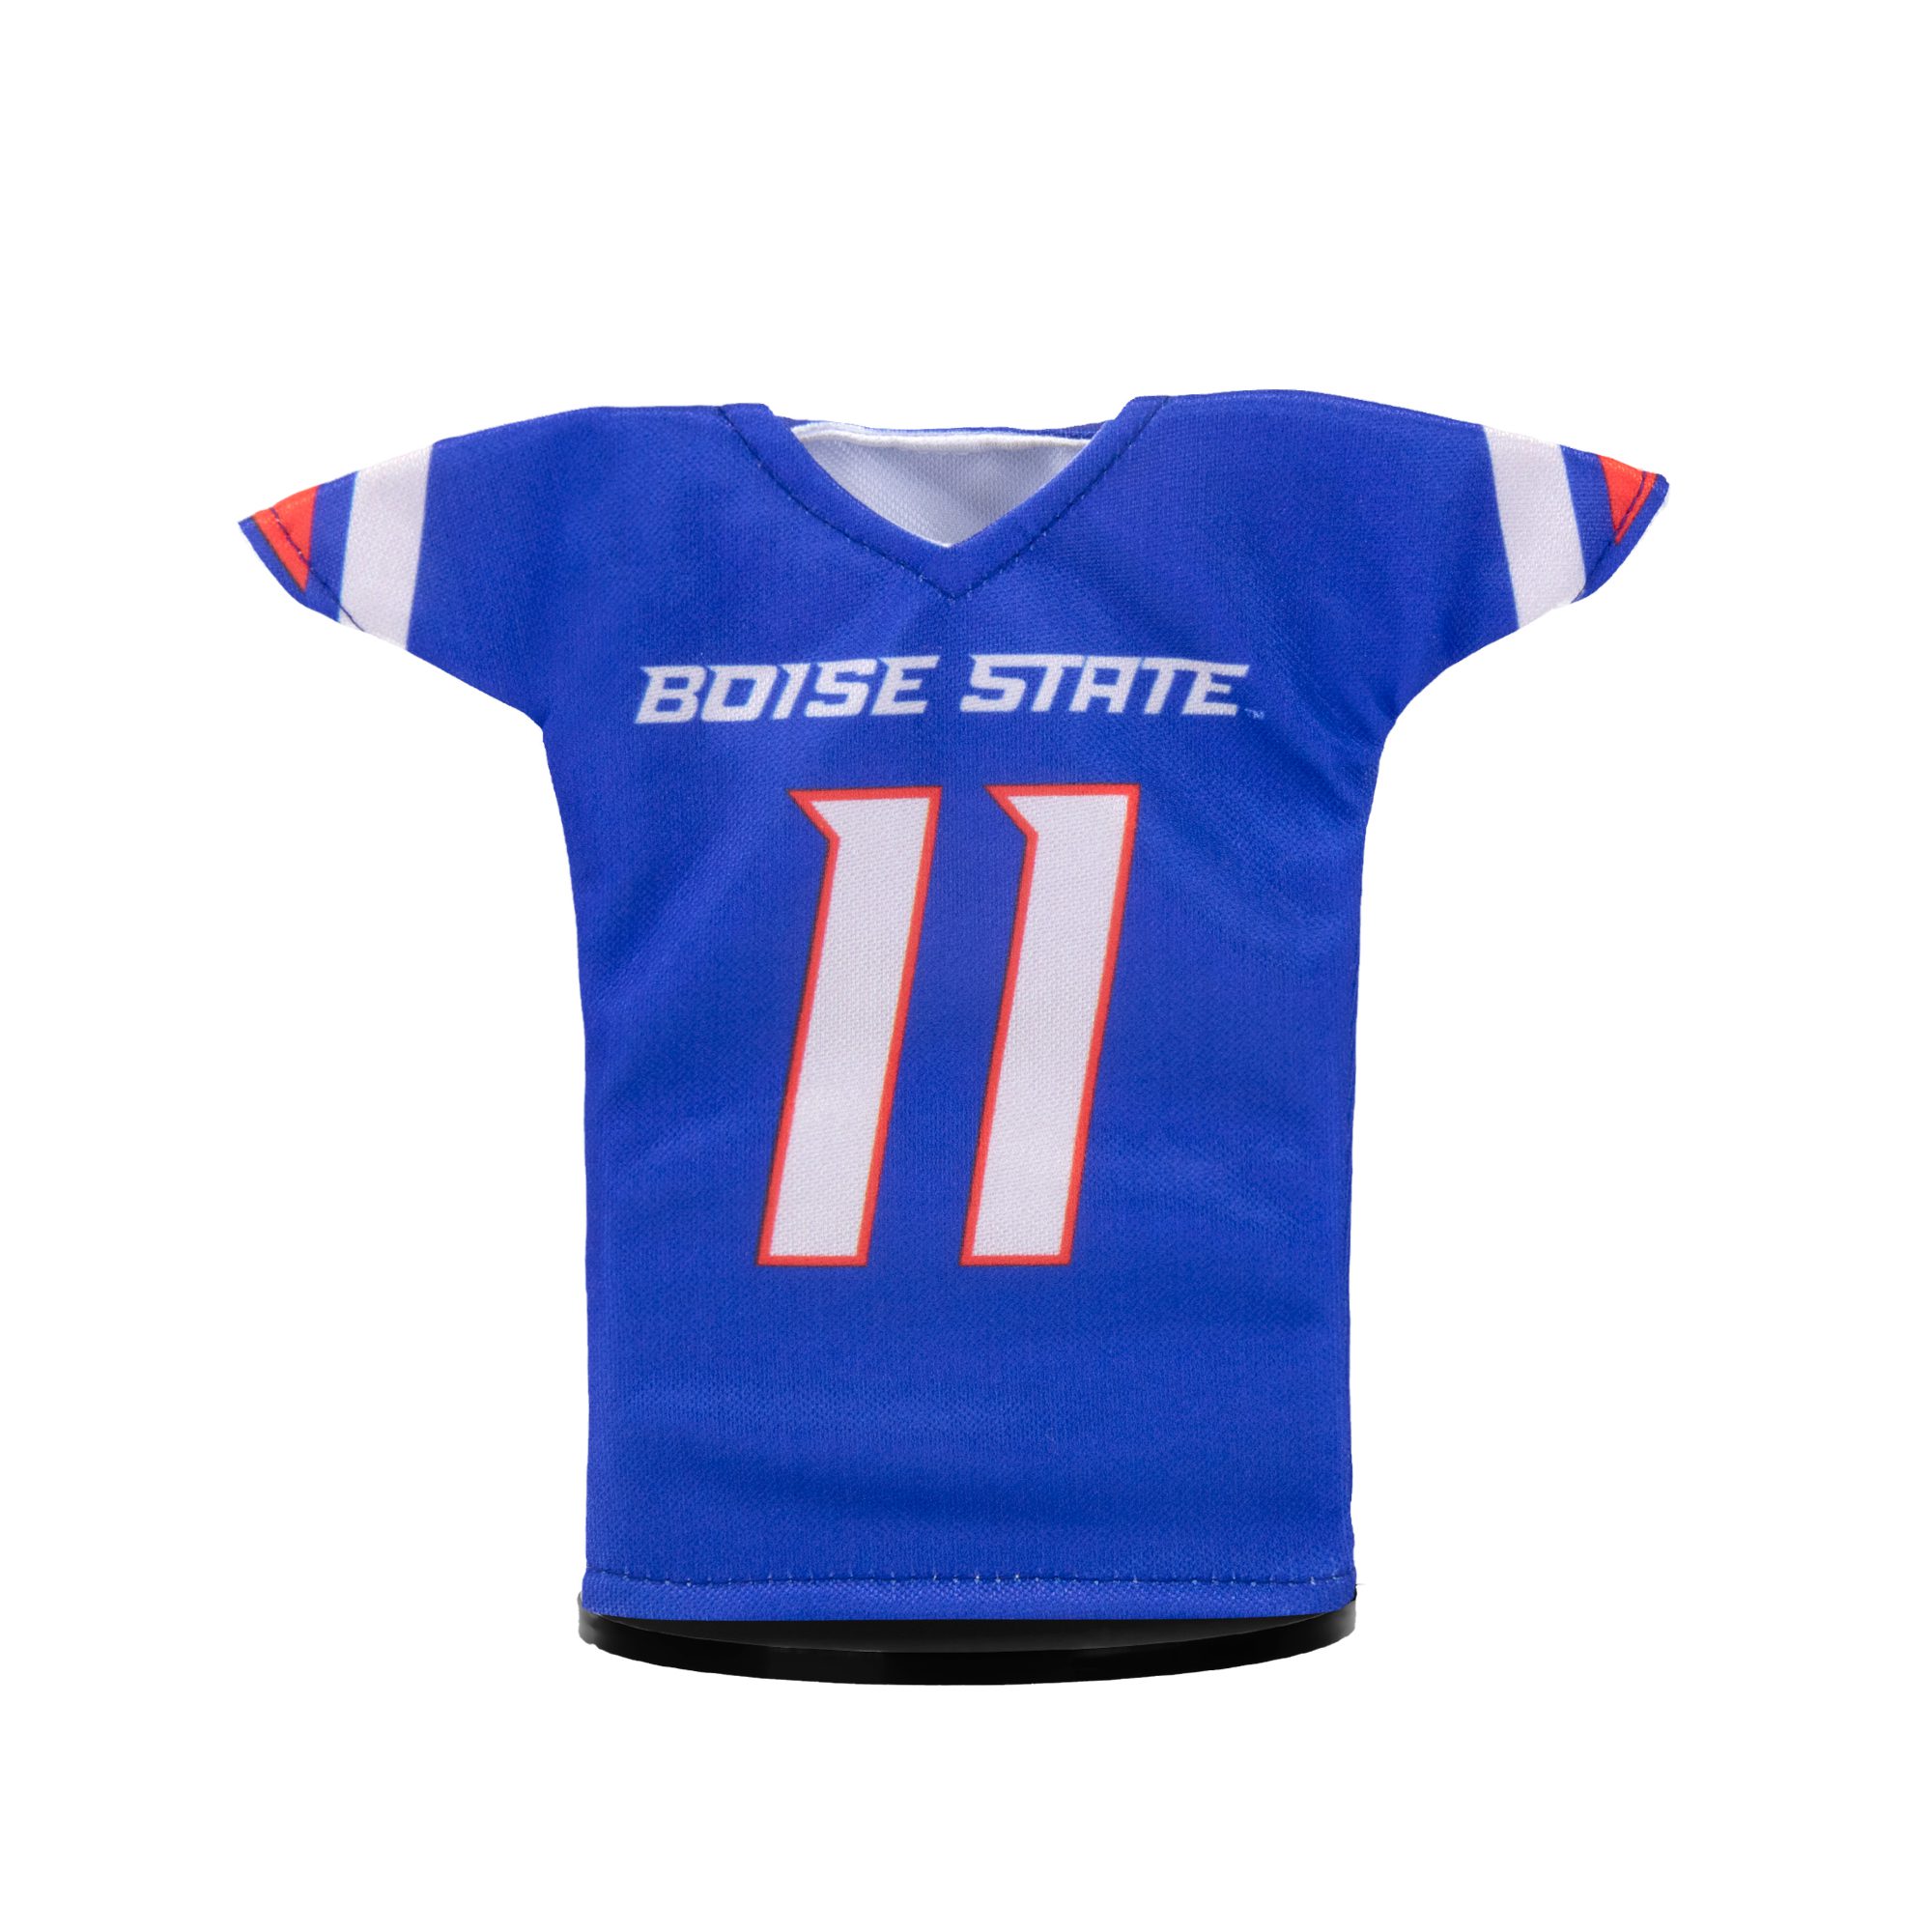 Boise State Football #11 Miniature Jersey Blue